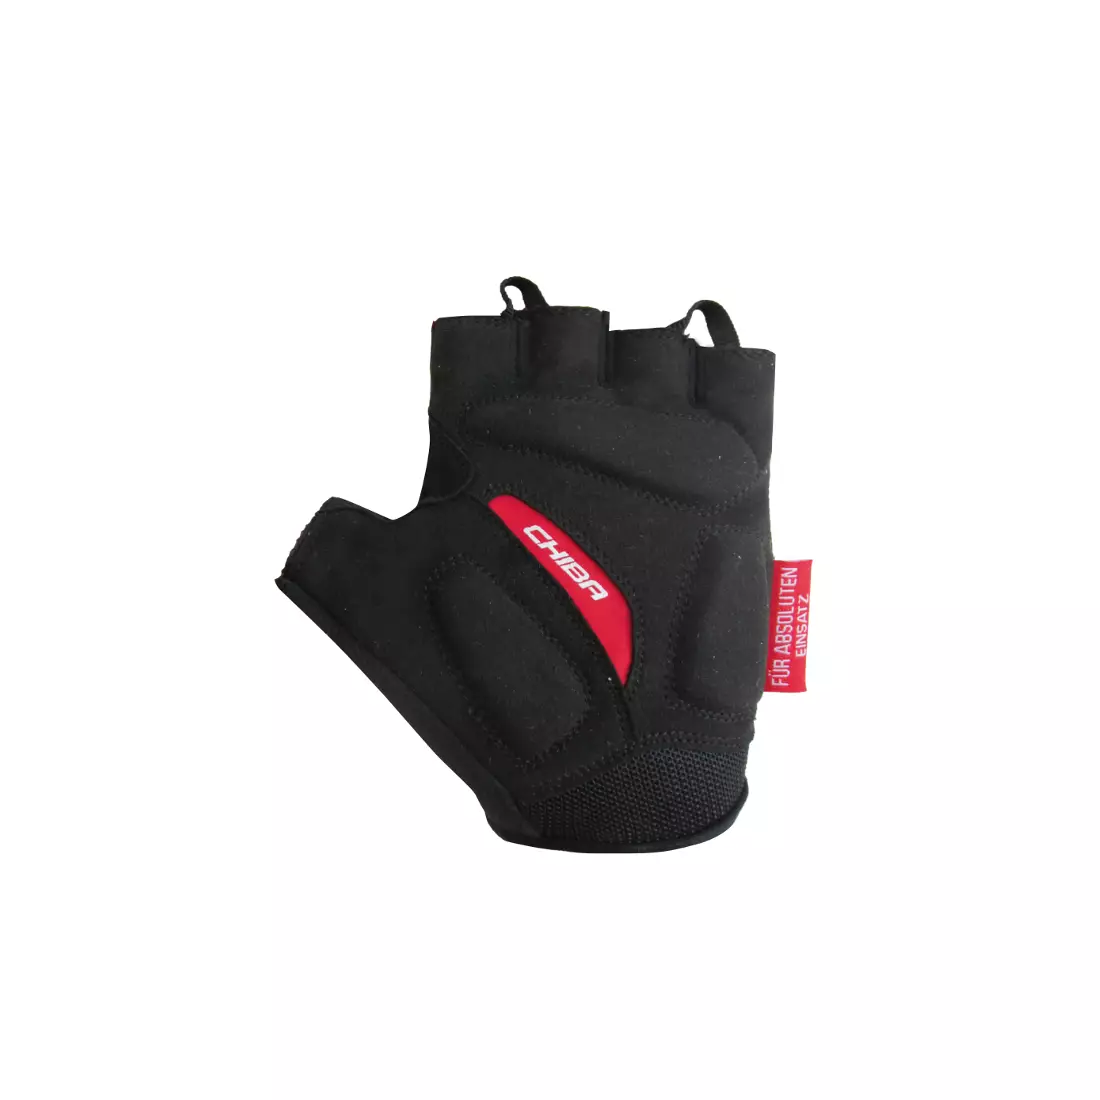 CHIBA PRO RIDER cycling gloves, black